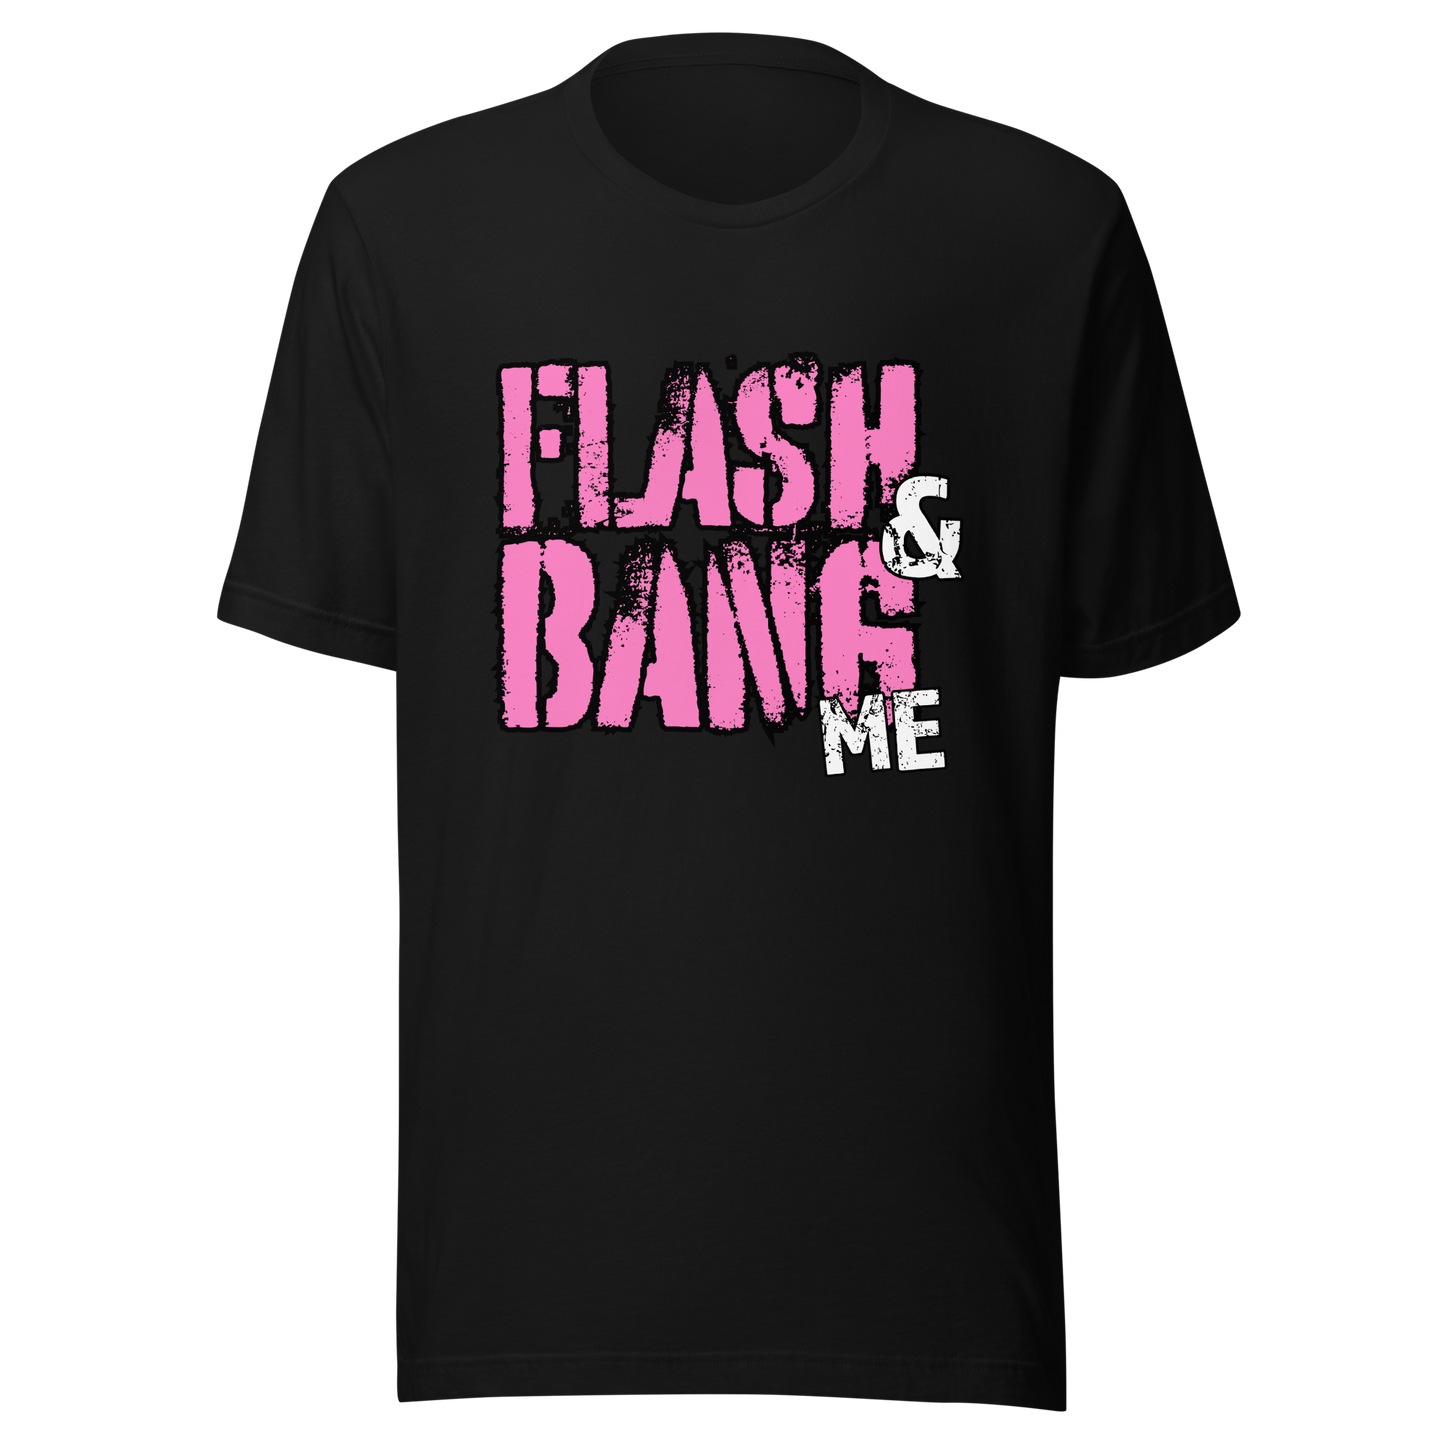 Unisex Short-Sleeve Top: Flashbang Me